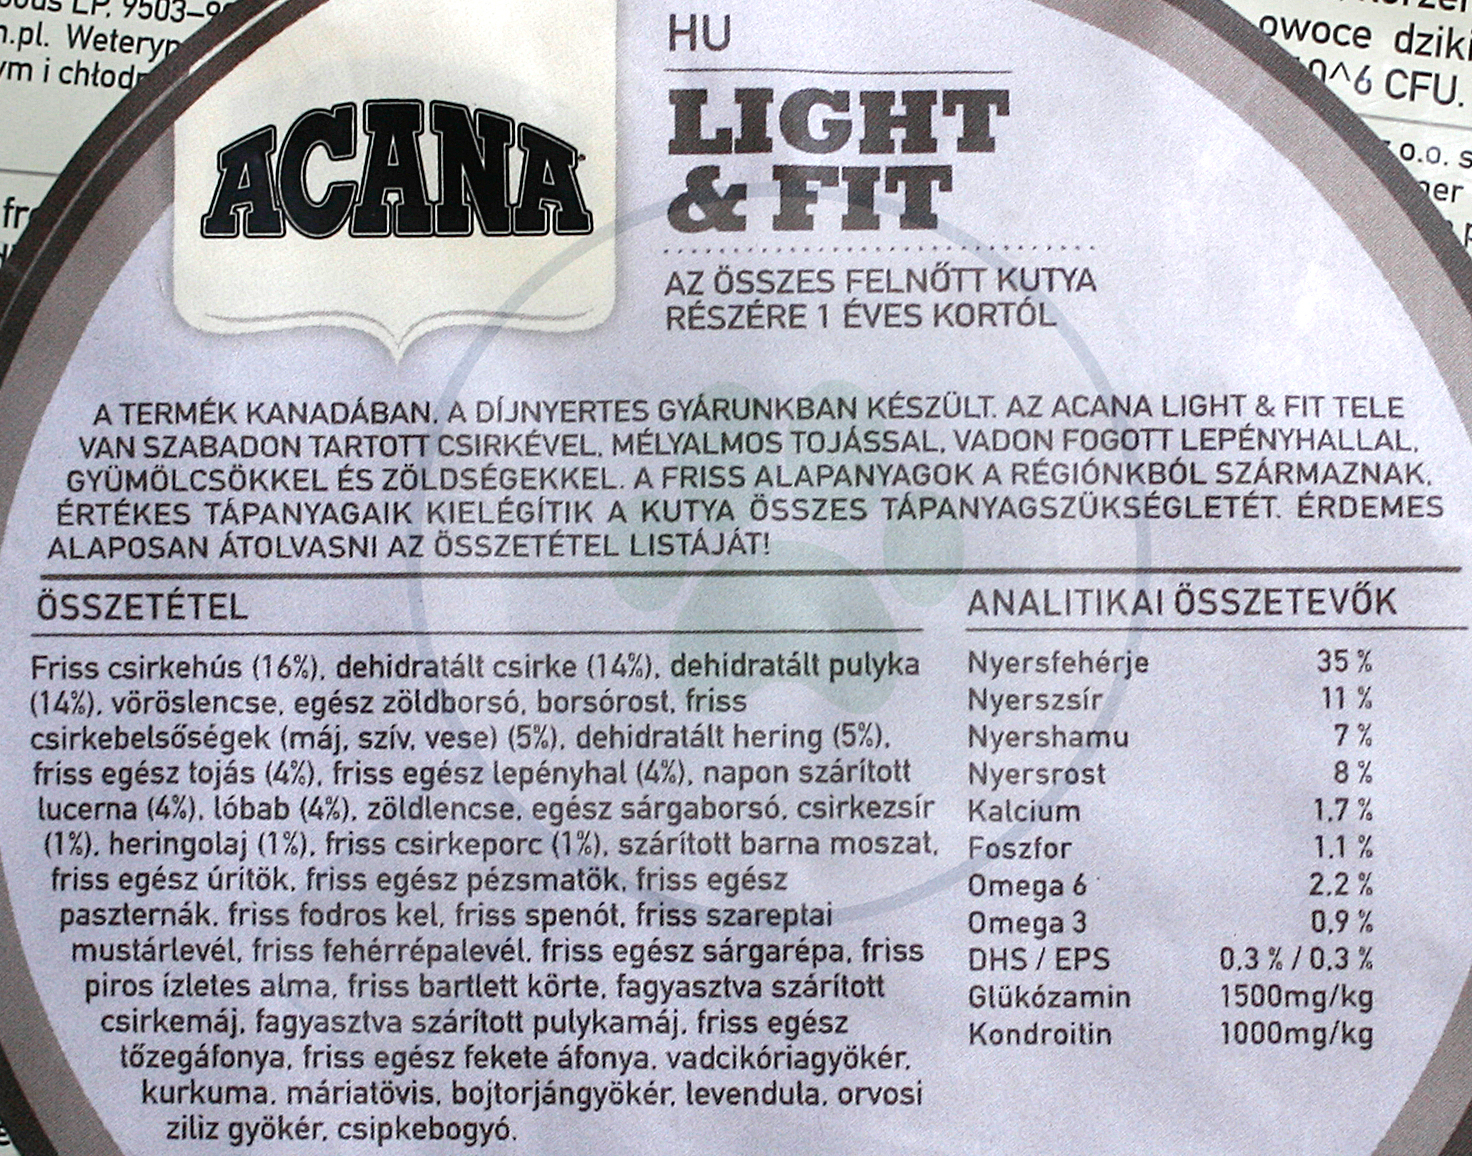 Acana Light & Fit - zoom